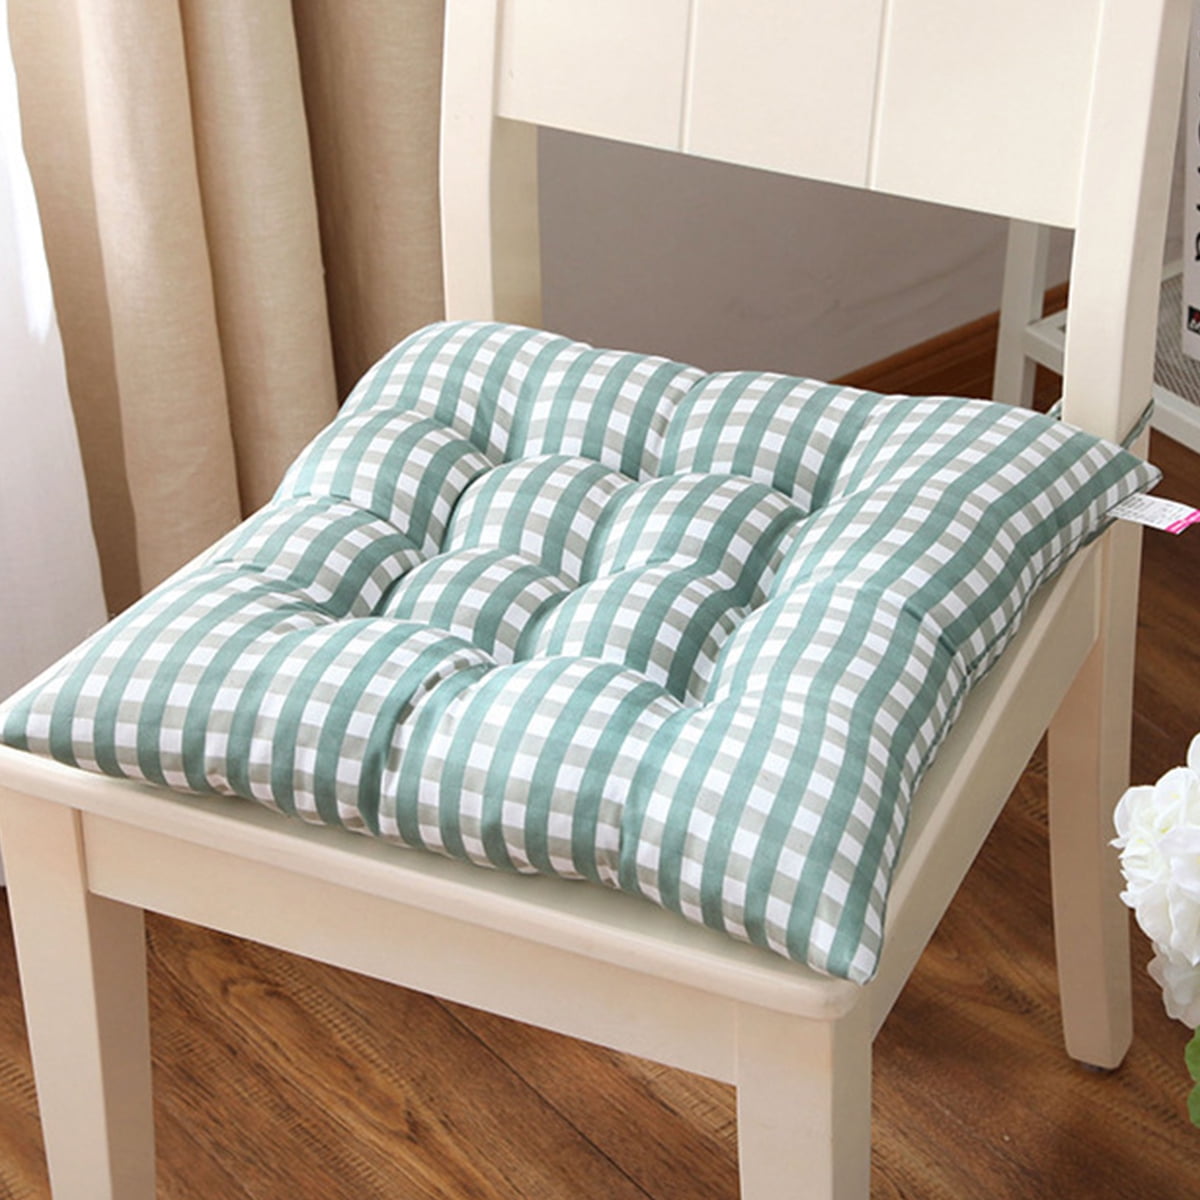 16x16 inch Anti Slip Soft Square Cotton Chair Seat Cushion Pillow Mat